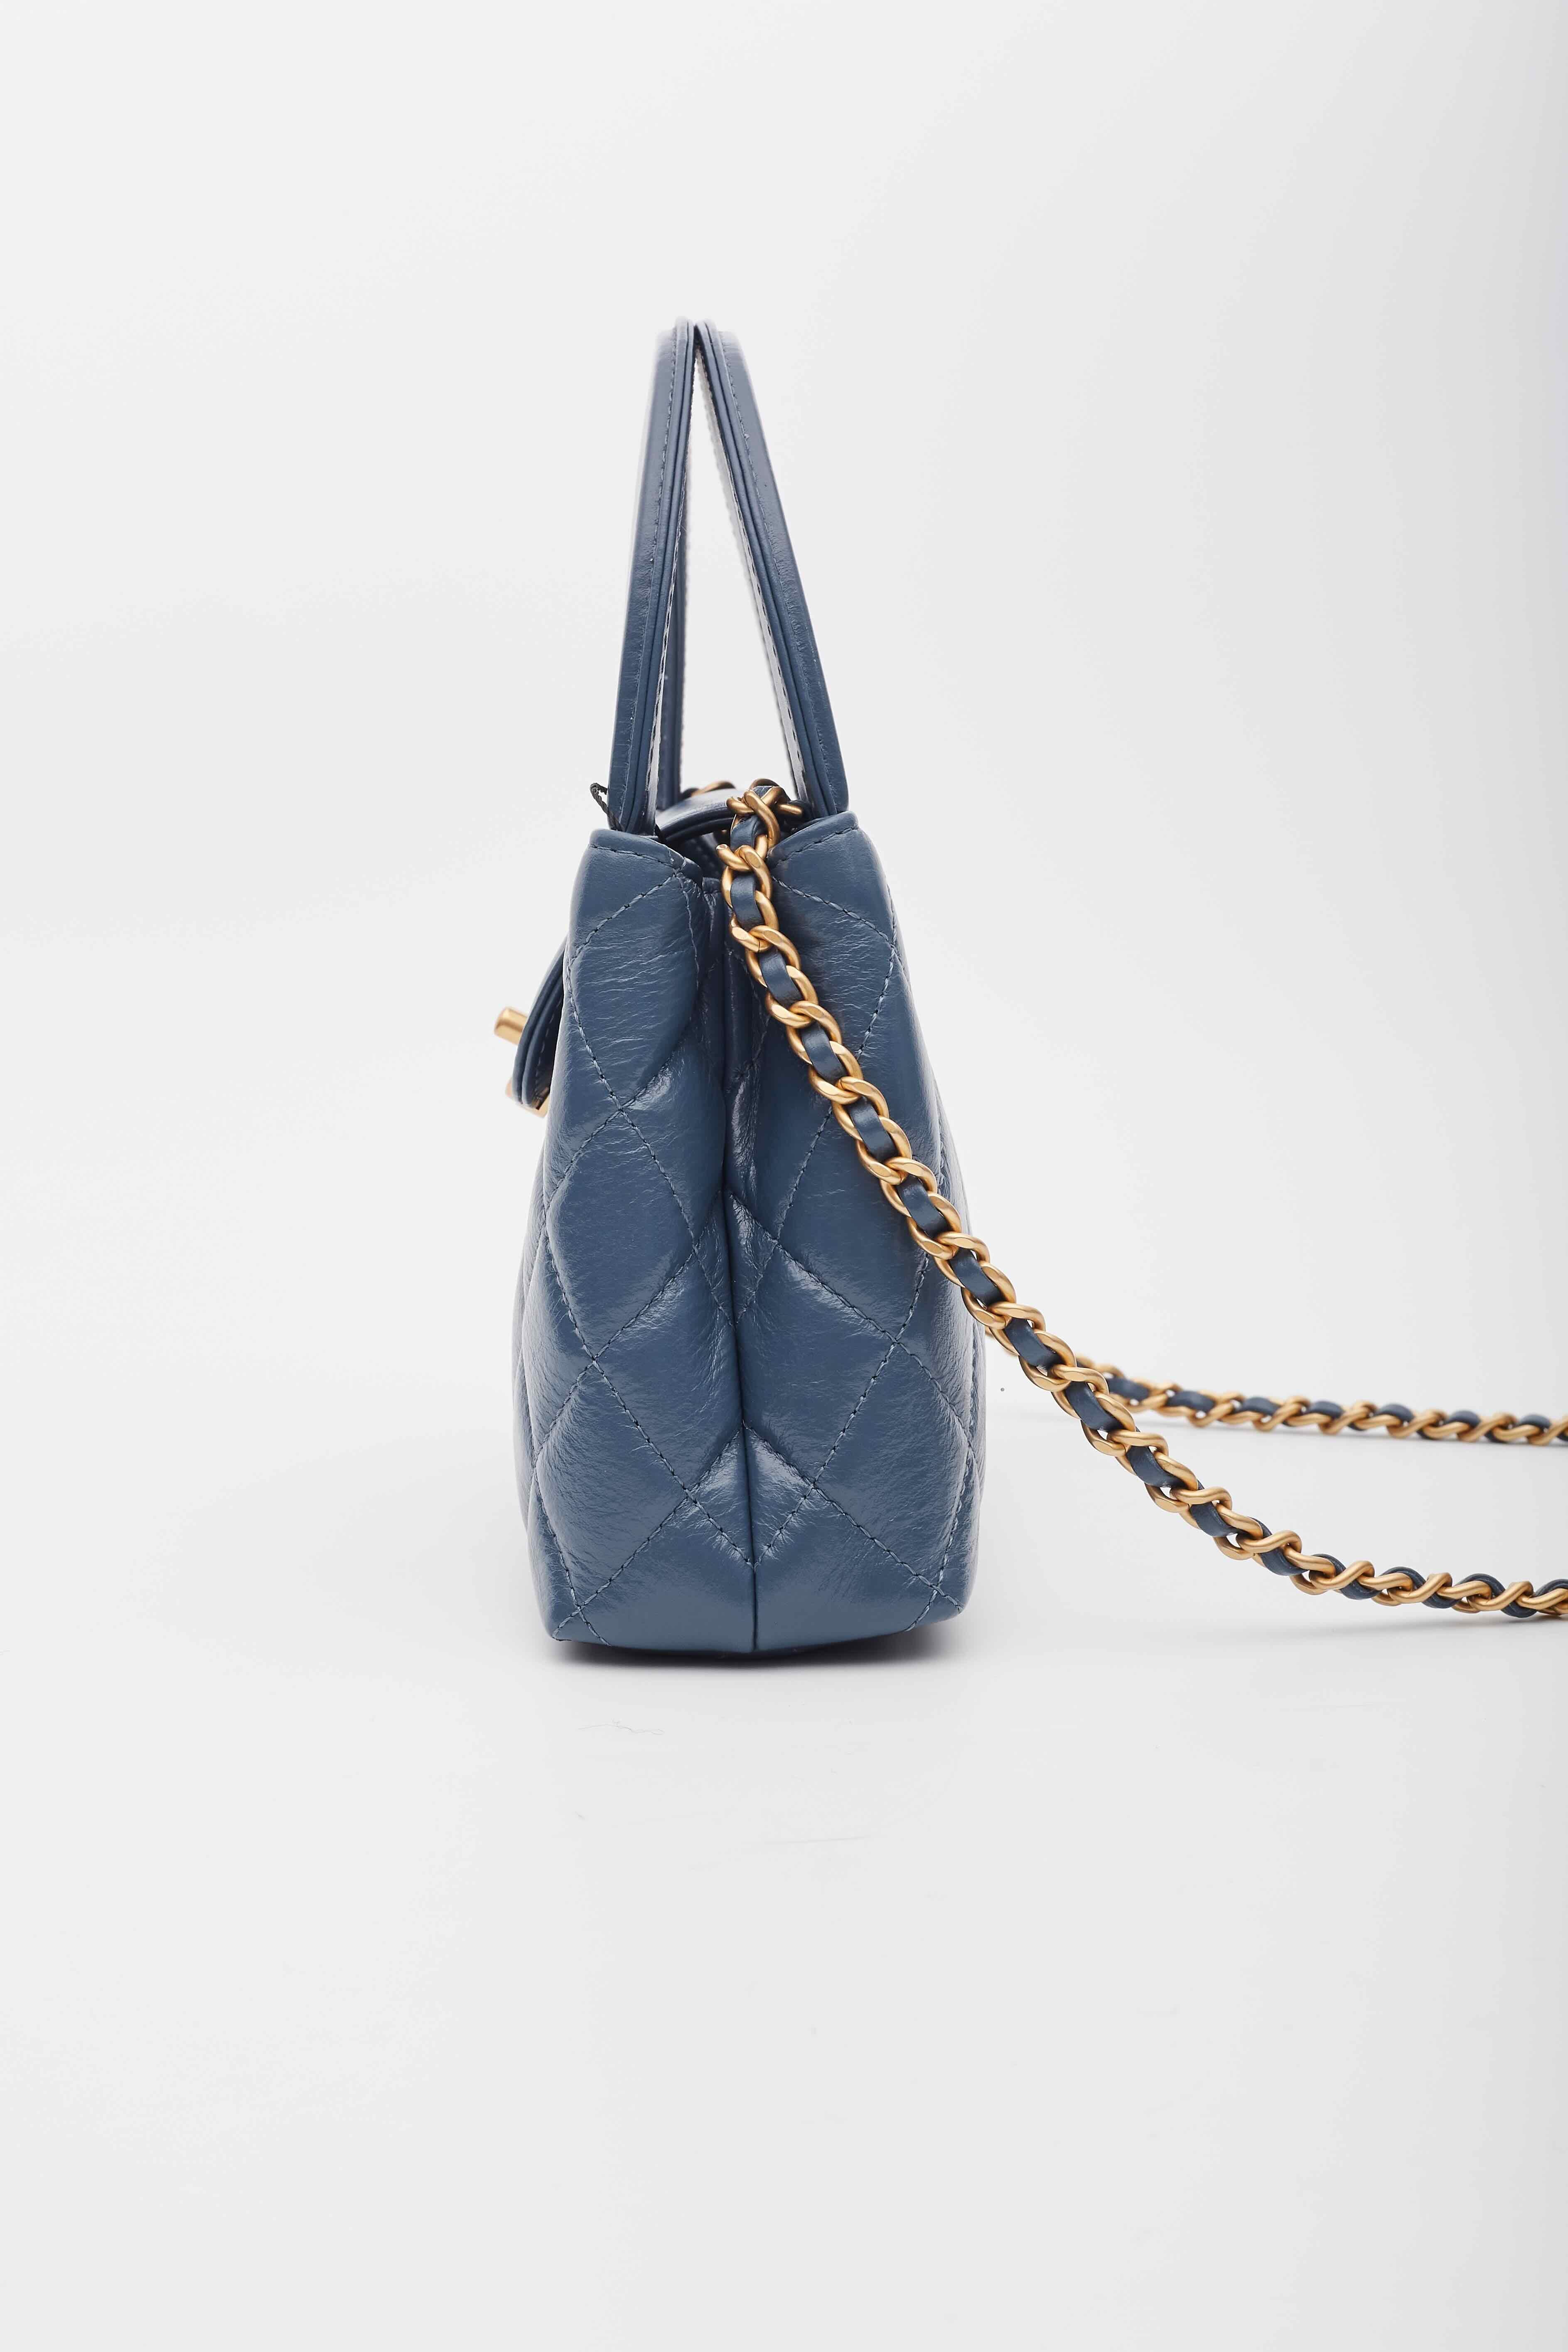 chanel mini shopping bag blue